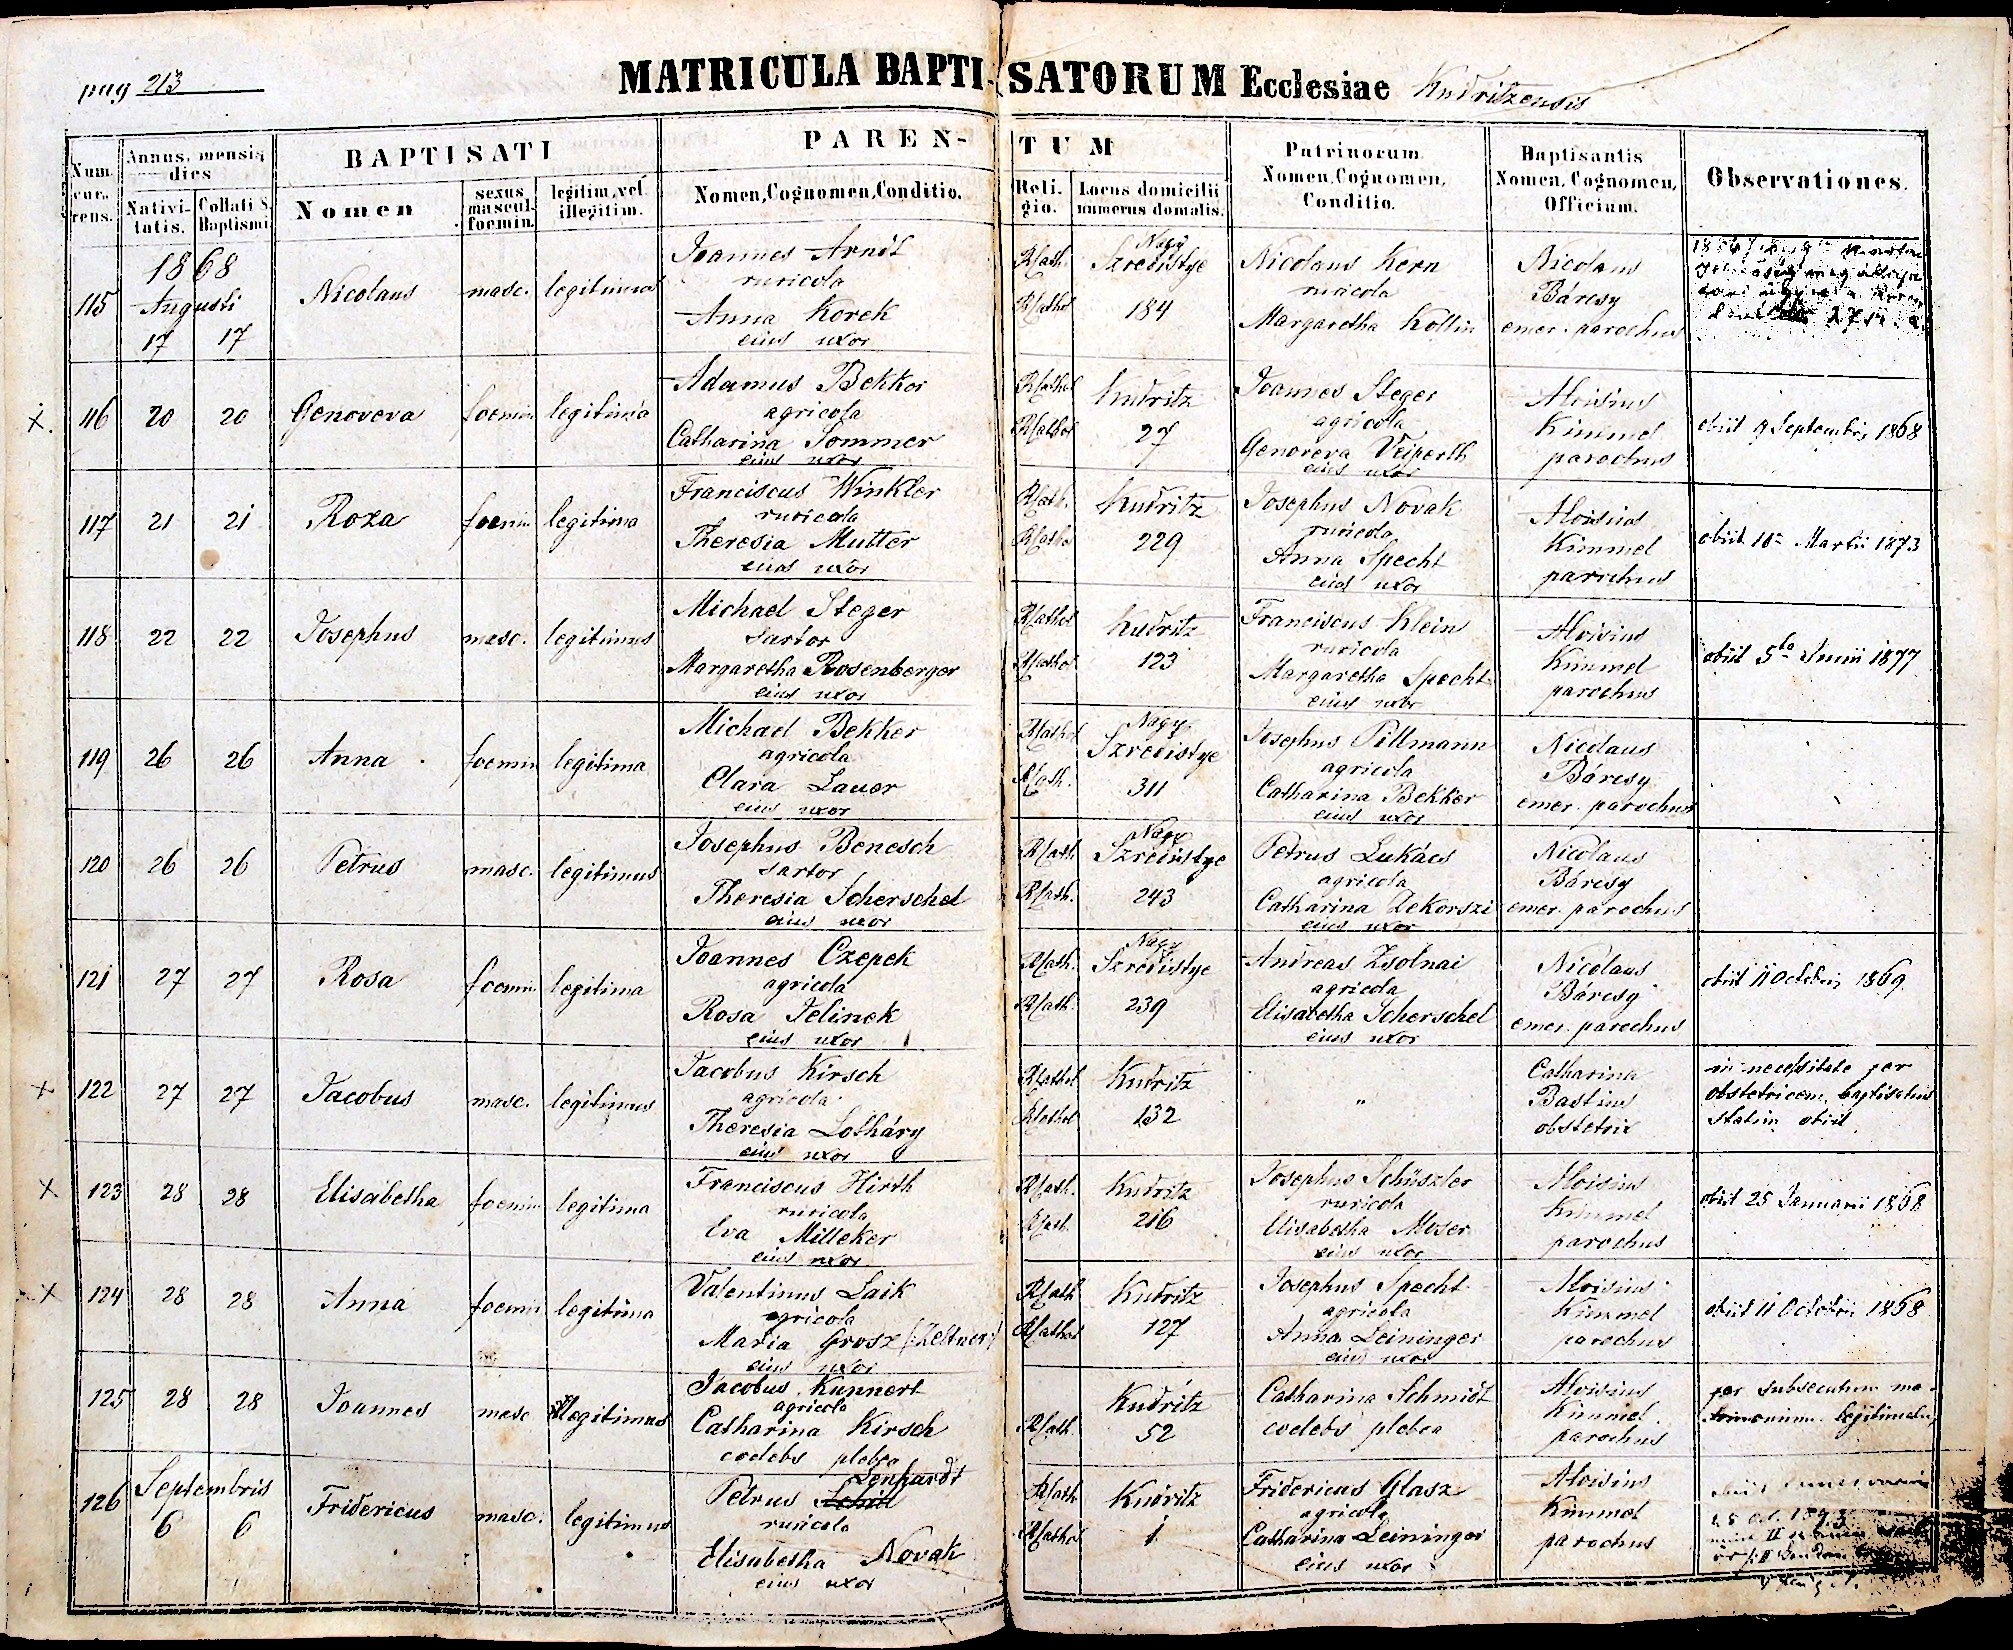 images/church_records/BIRTHS/1852-1870B/213